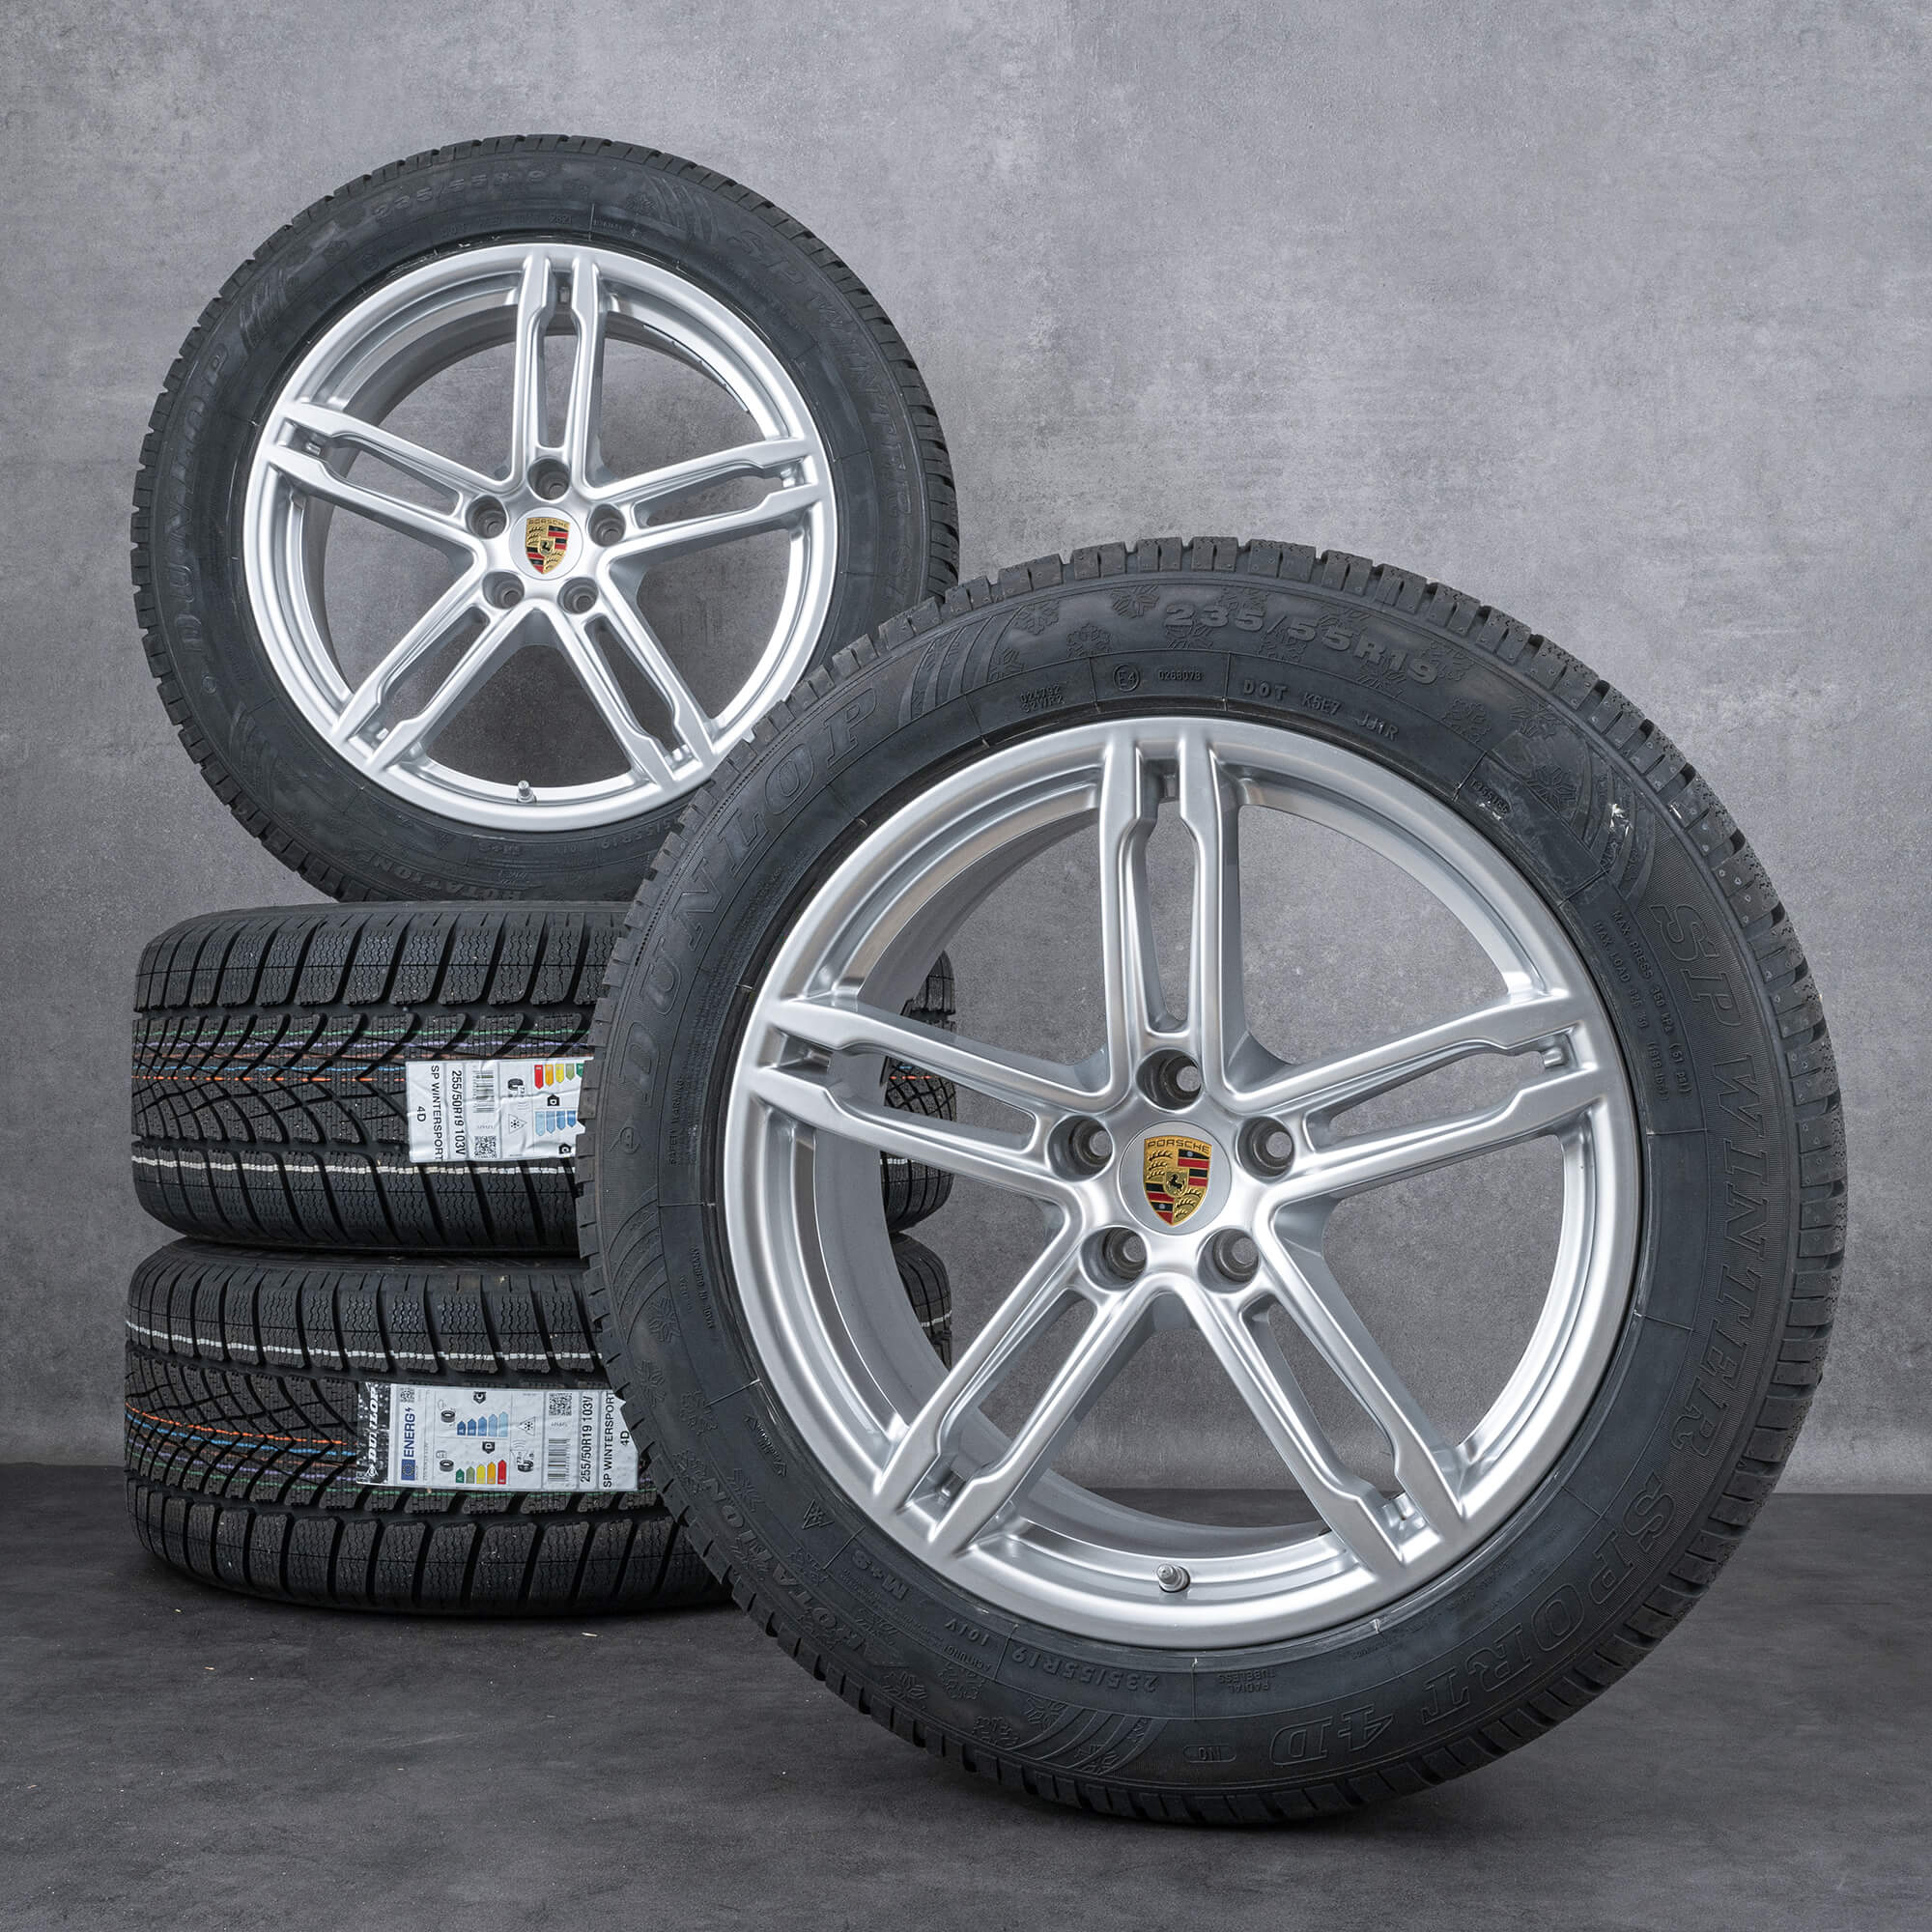 tires wheels 95B601025BB inch 19 winter I rims winter Macan Porsche Original NEW